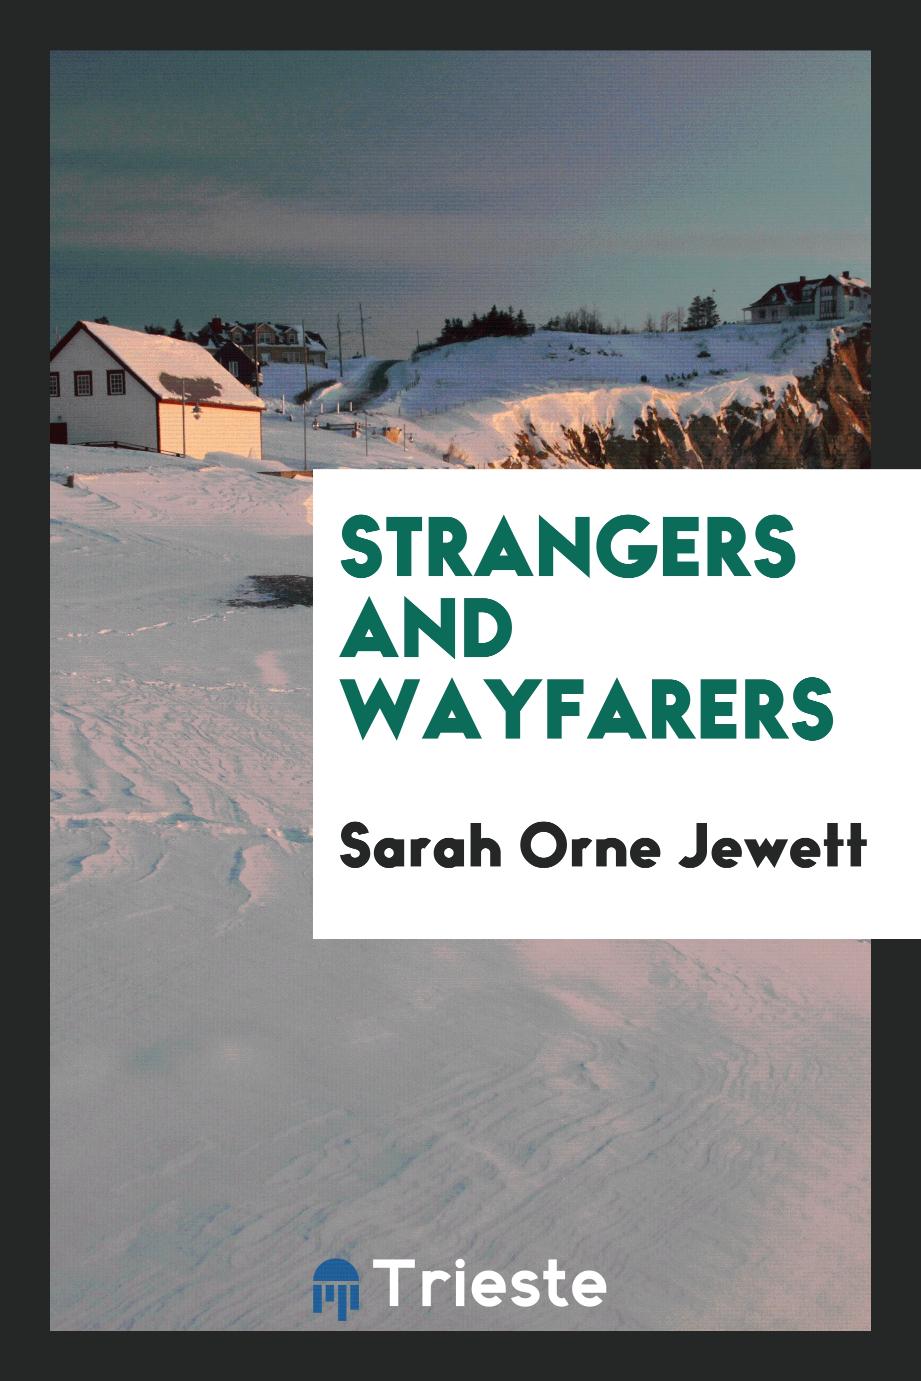 Strangers and wayfarers